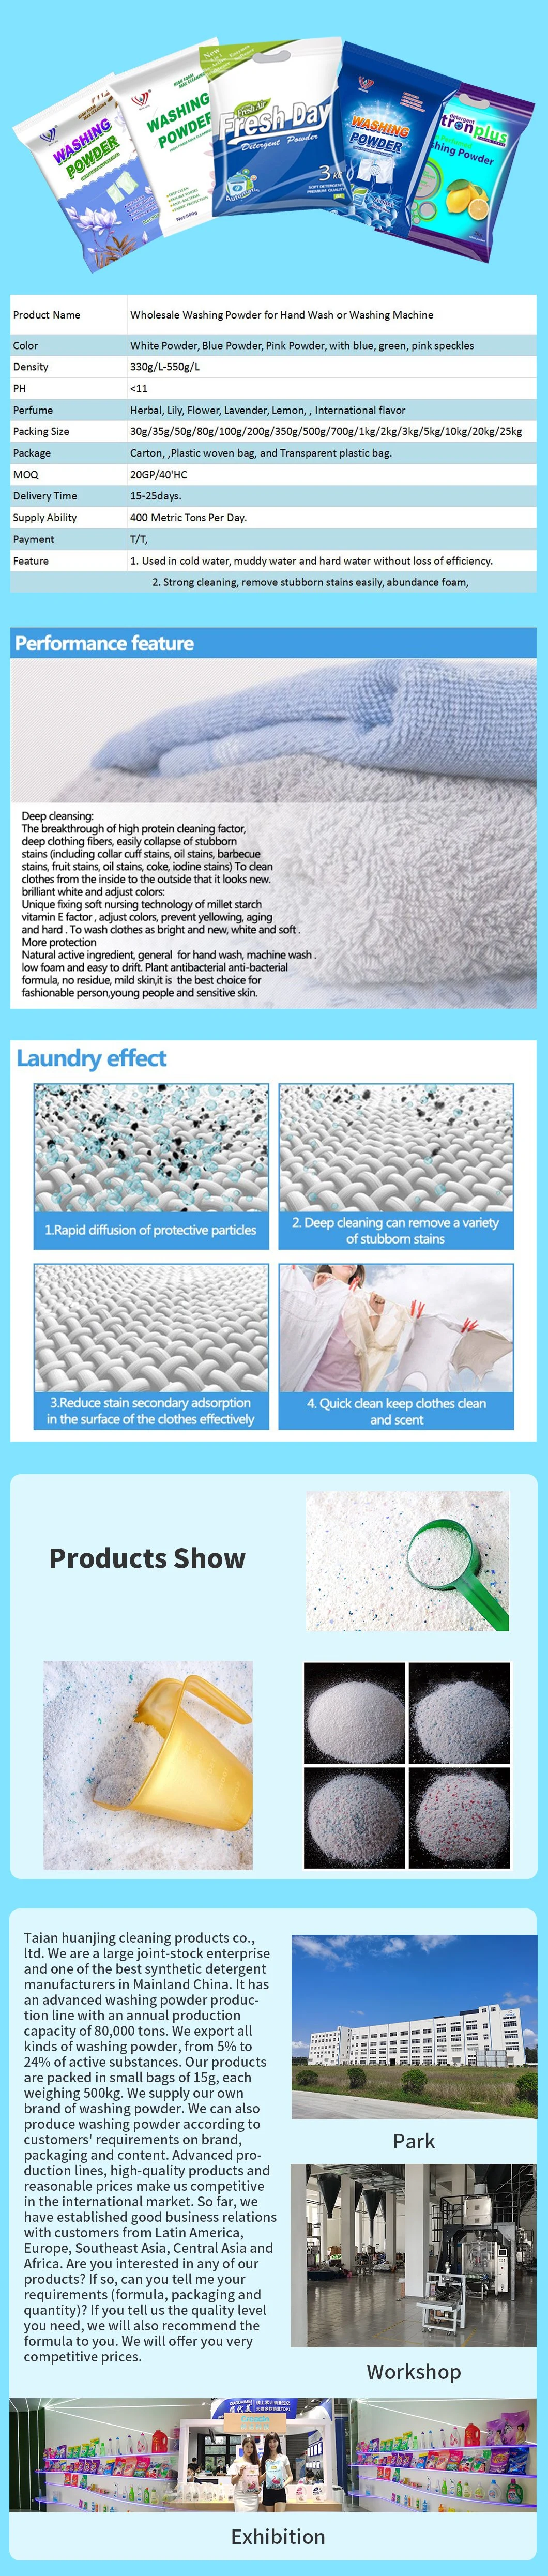 Good Price Good Quality Laundry Powder, Washing Powder, Powder Detergent, Washing Detergent Powder